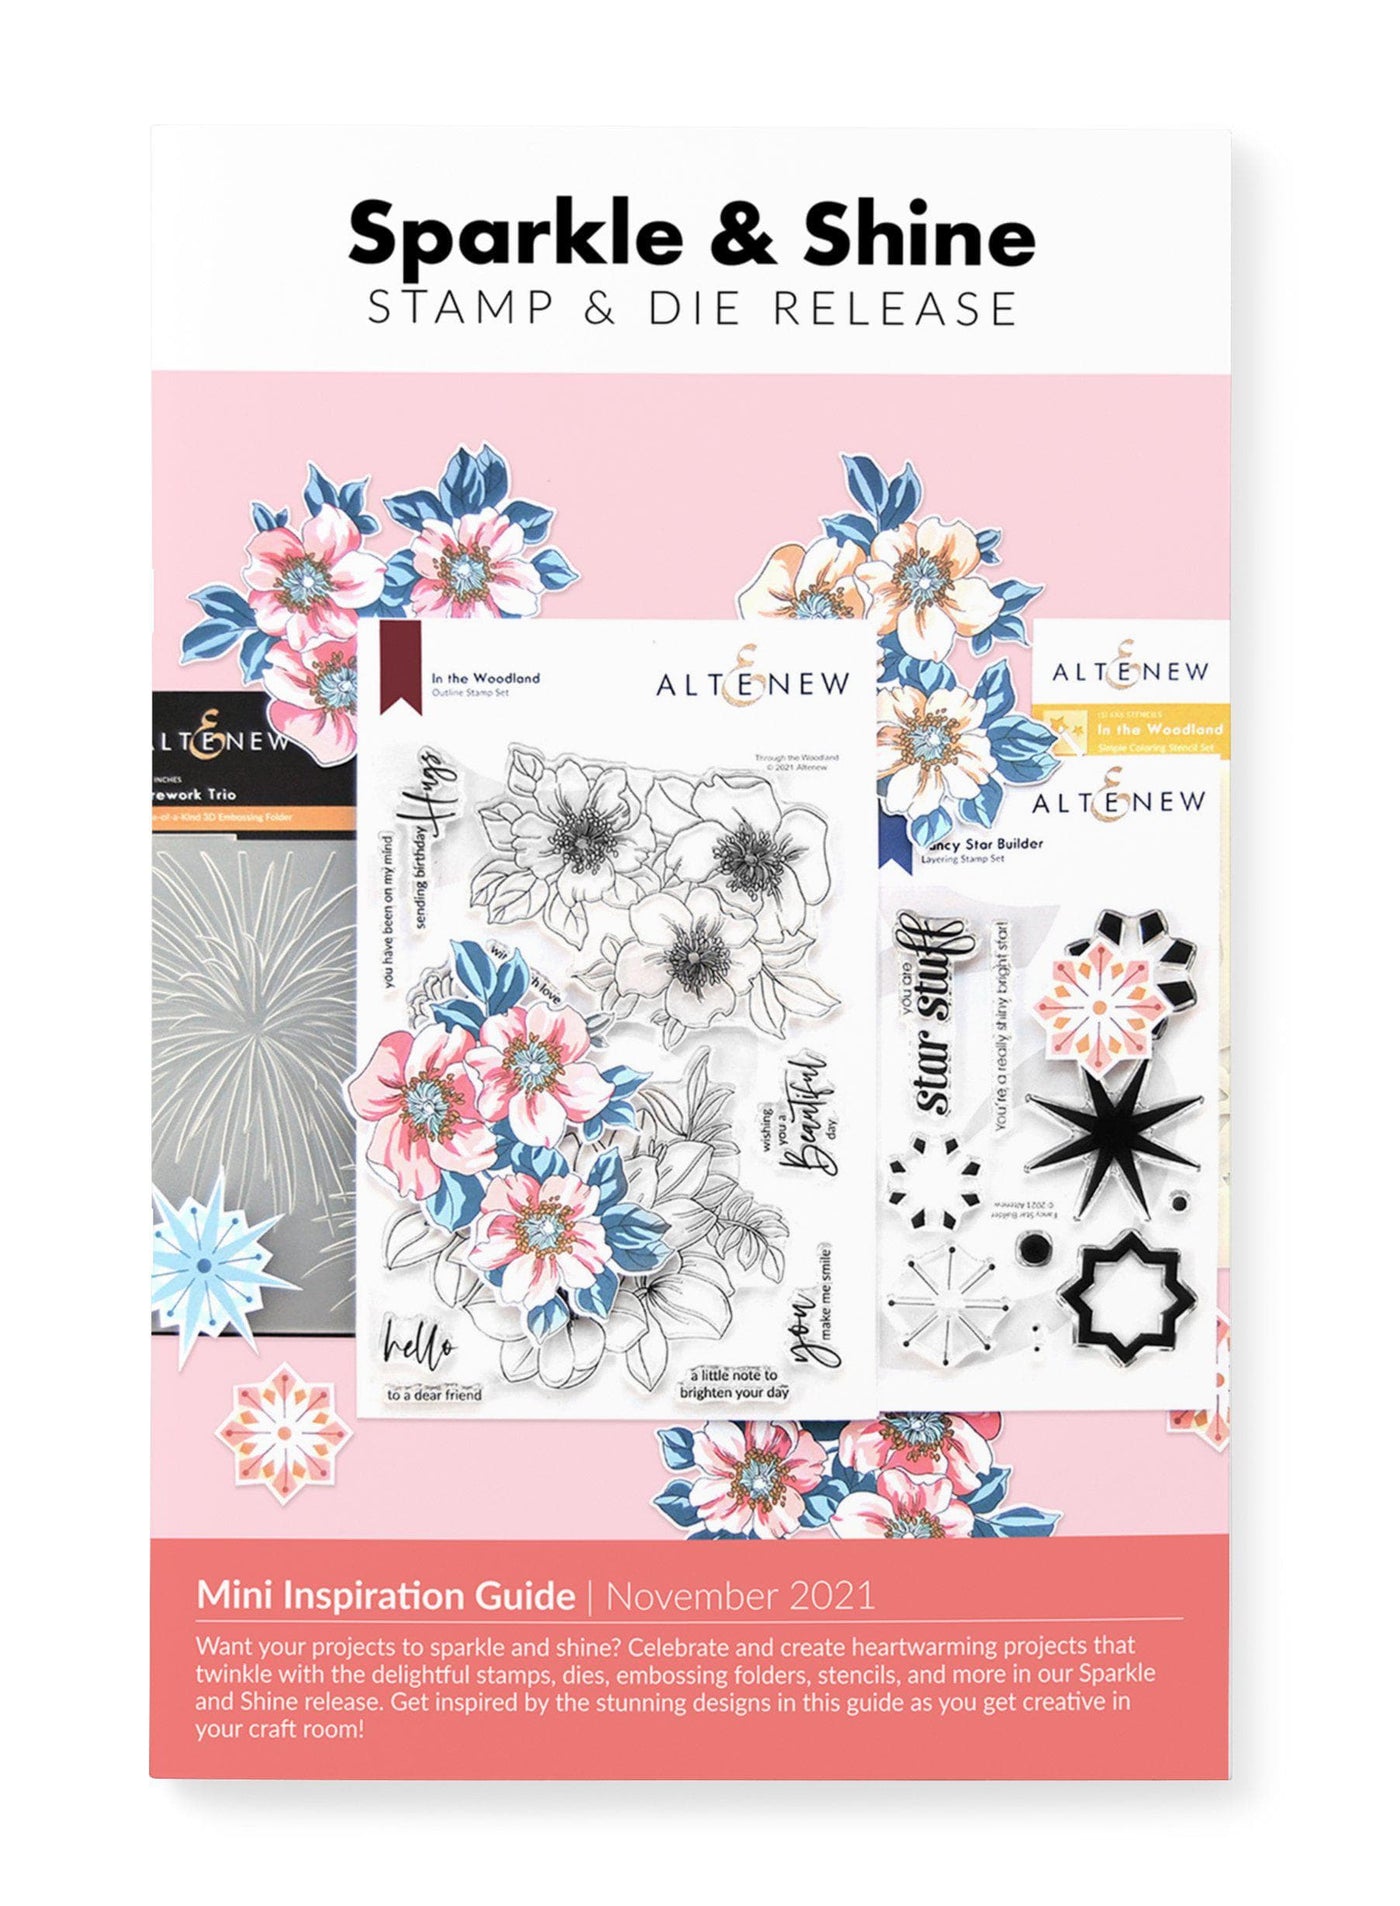 Printed Media Sparkle & Shine Stamp & Die Release Mini Inspiration Guide